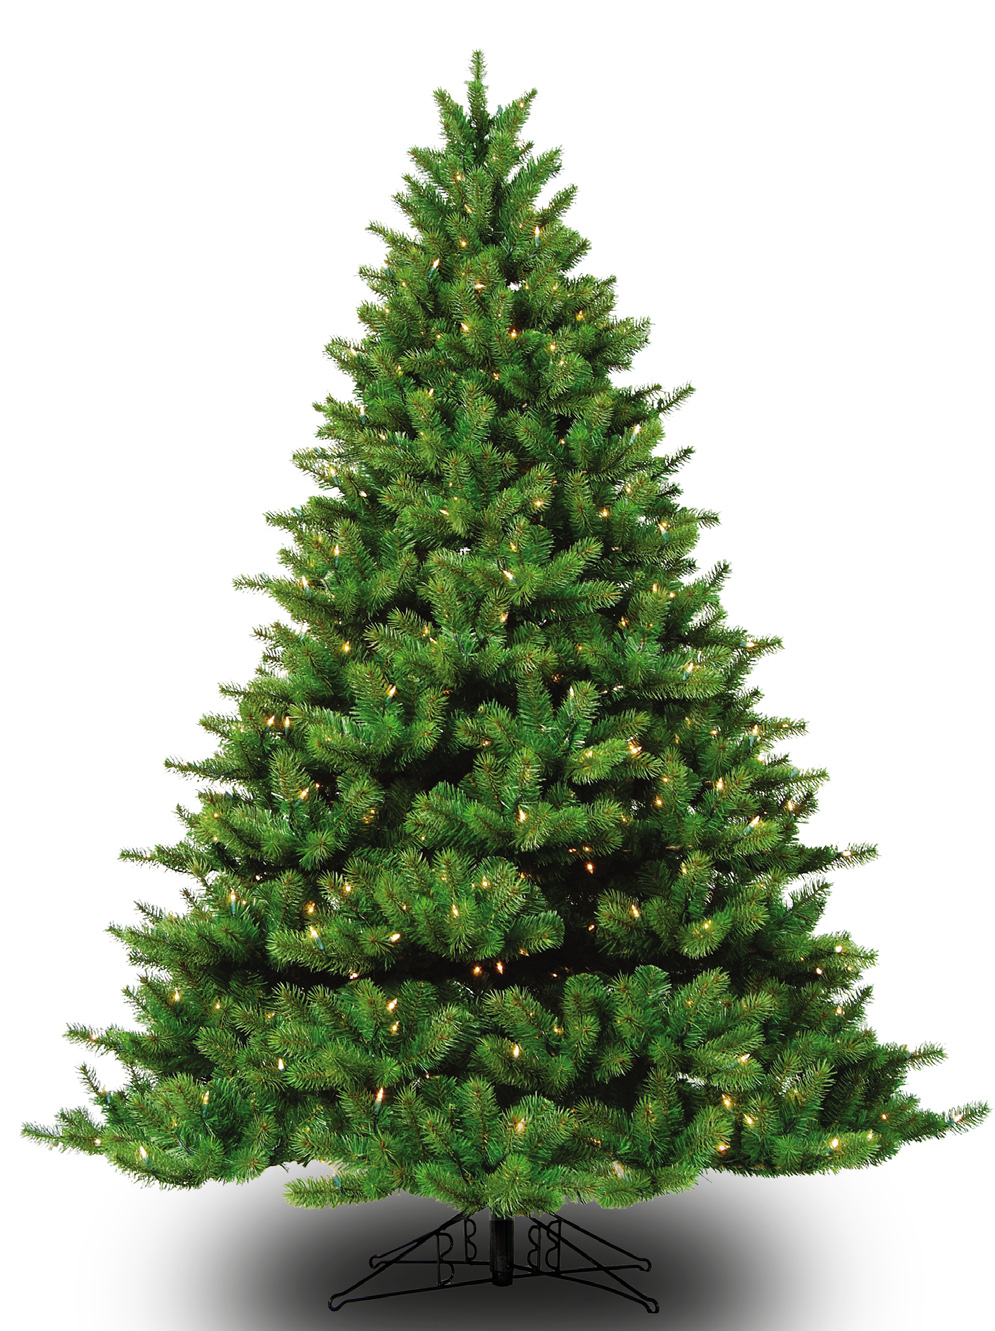 Appalachian Deluxe Christmas Tree - Warm White LED Bulbs - One-Plug Power Supply - 7.5ft Tall